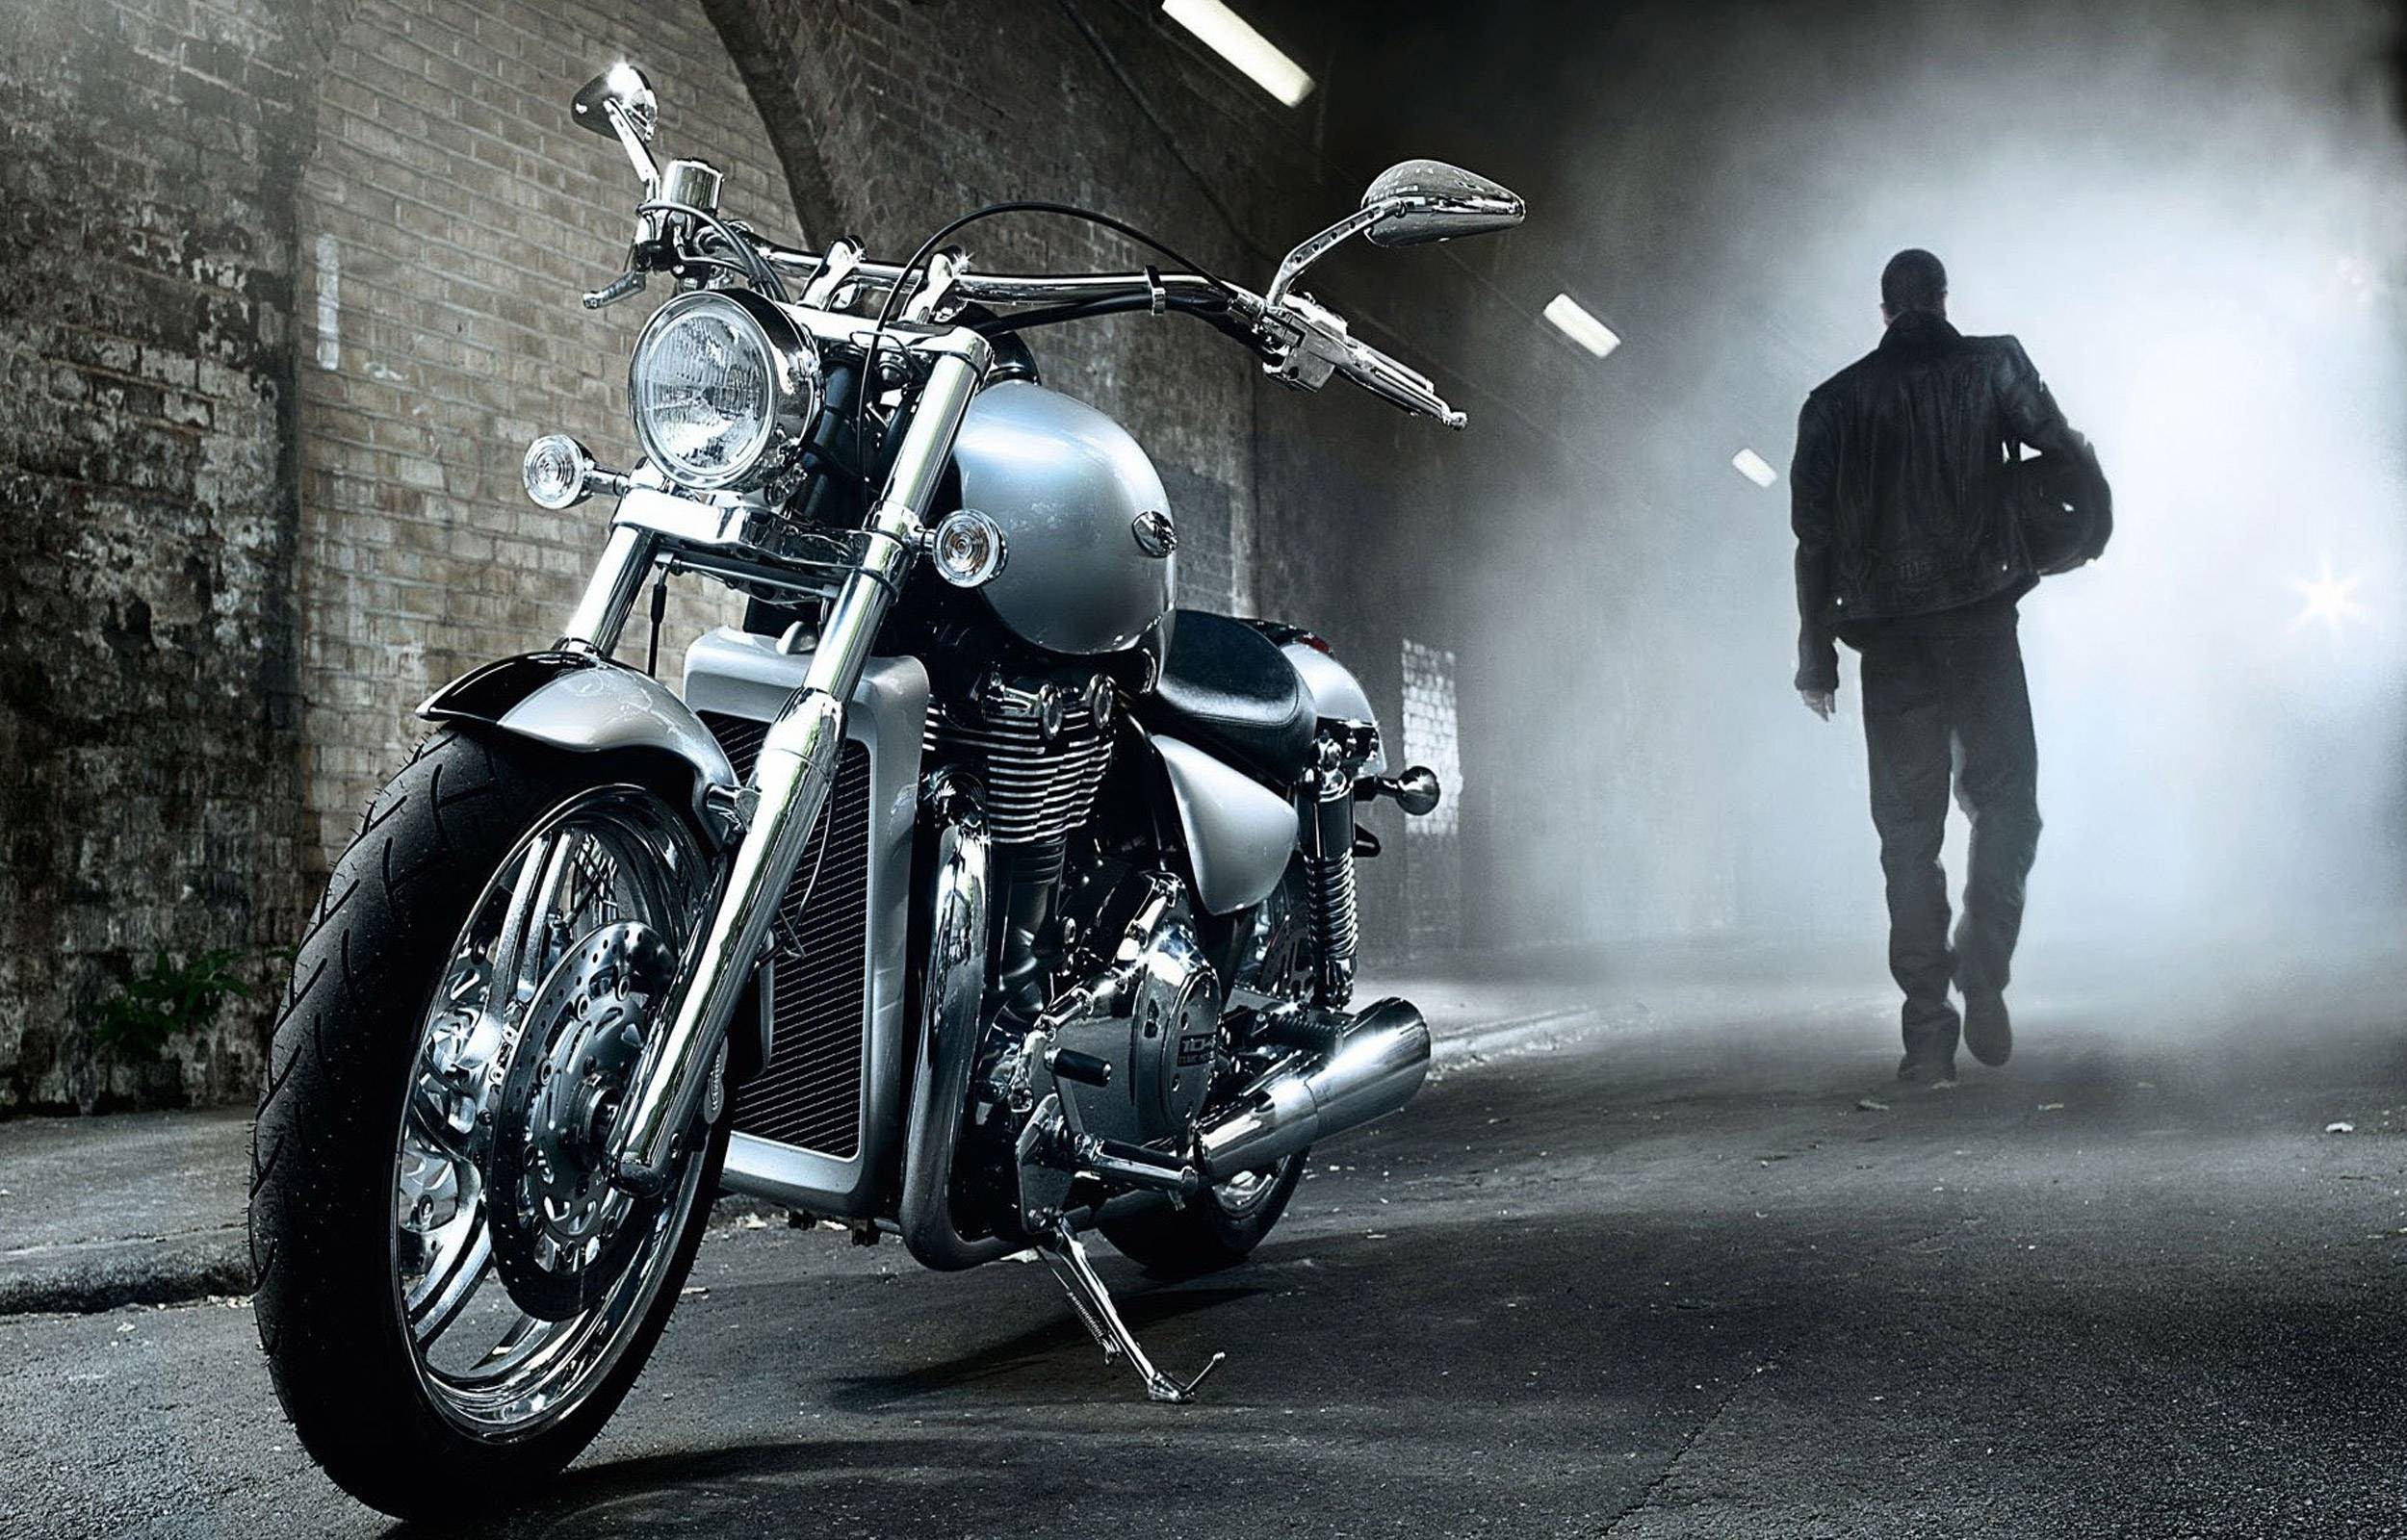 Harley Davidson Wallpaper And Screensavers Image